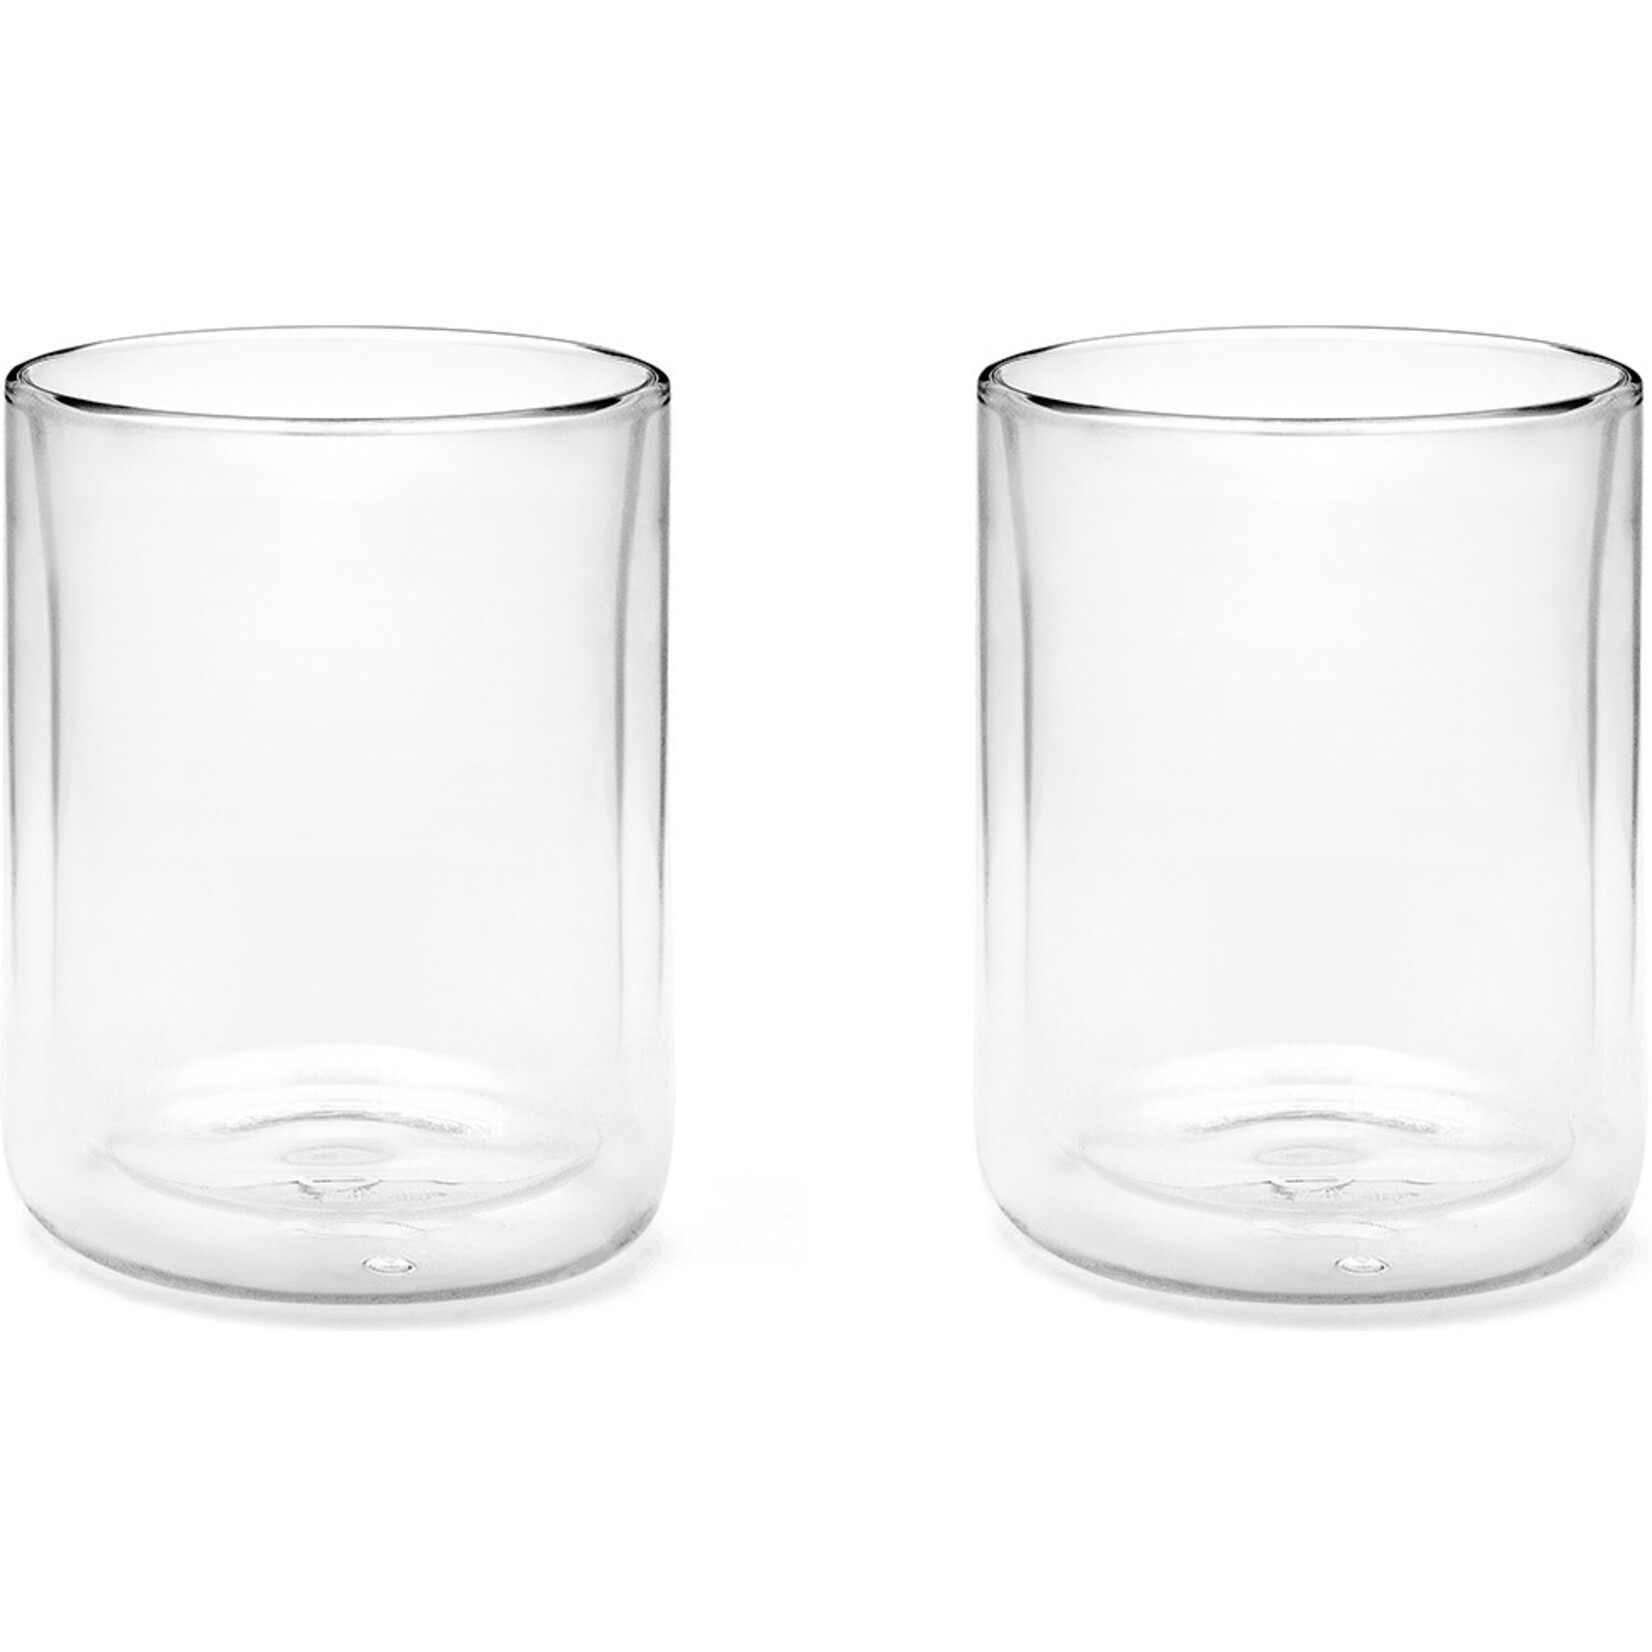 Bredemeijer Bredemeijer Dubbelwandig glas San Remo 290 ml, 2 stuks